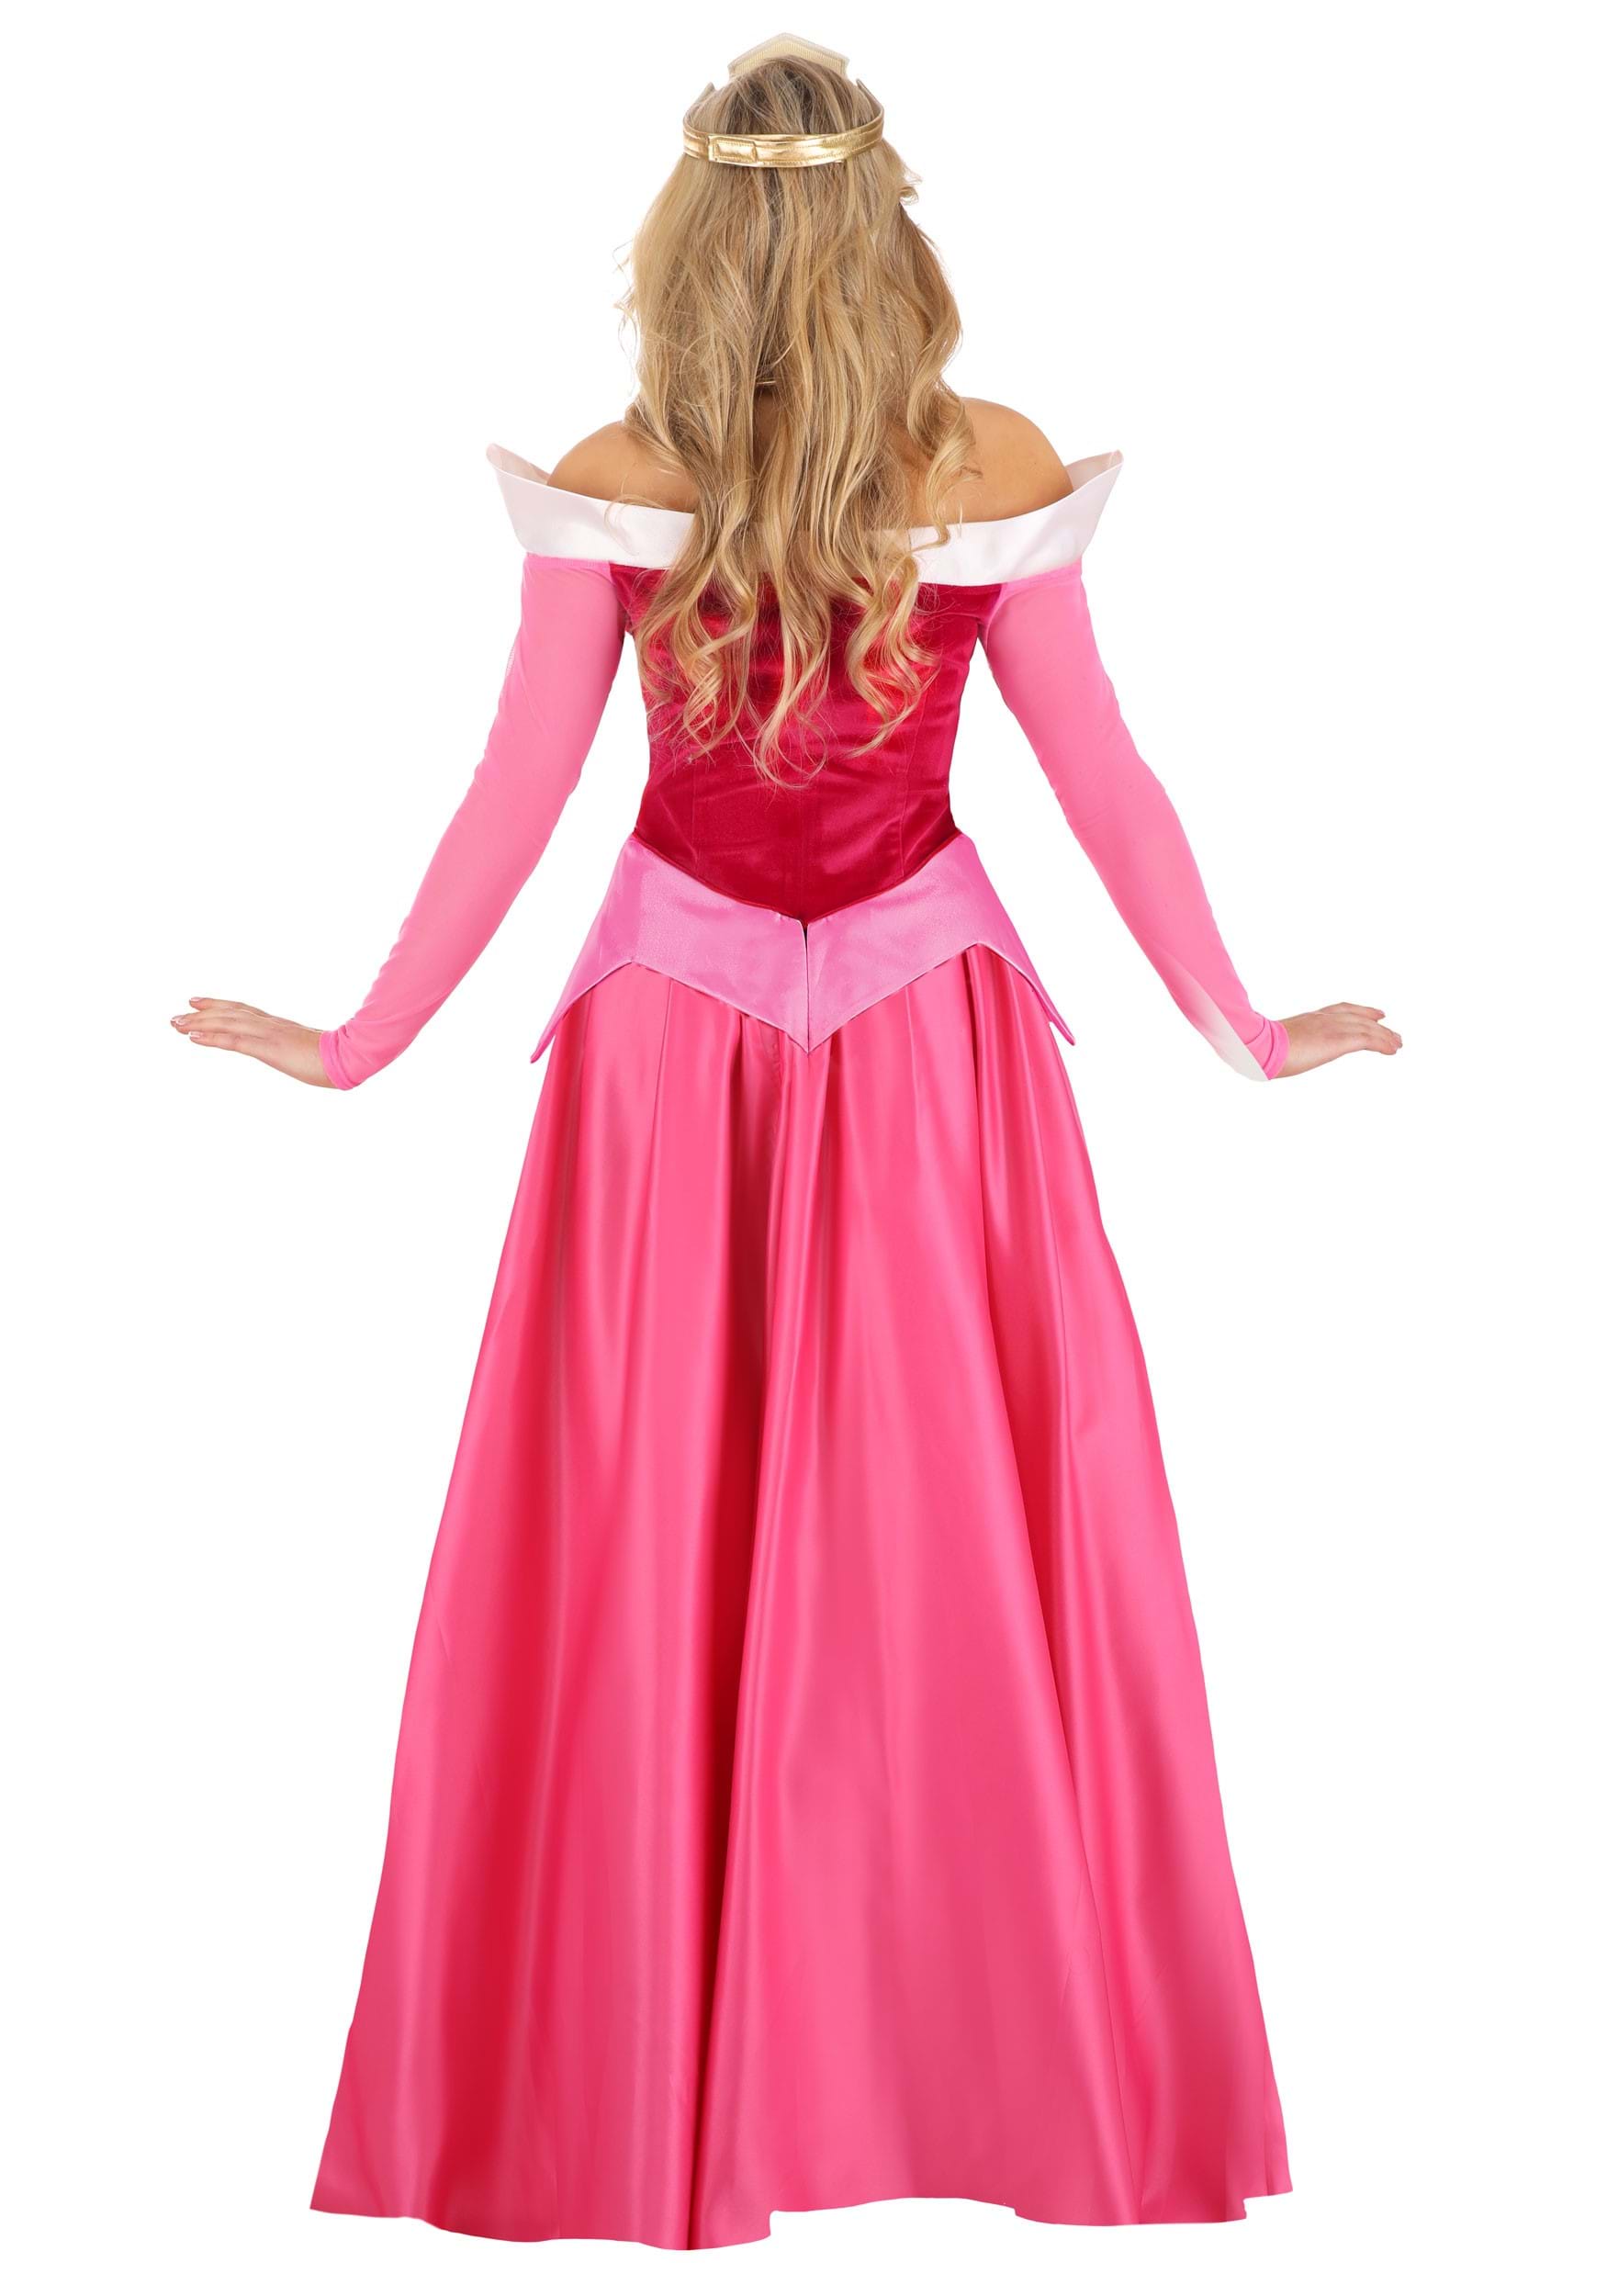 Women's Premium Disney Sleeping Beauty Aurora Costume